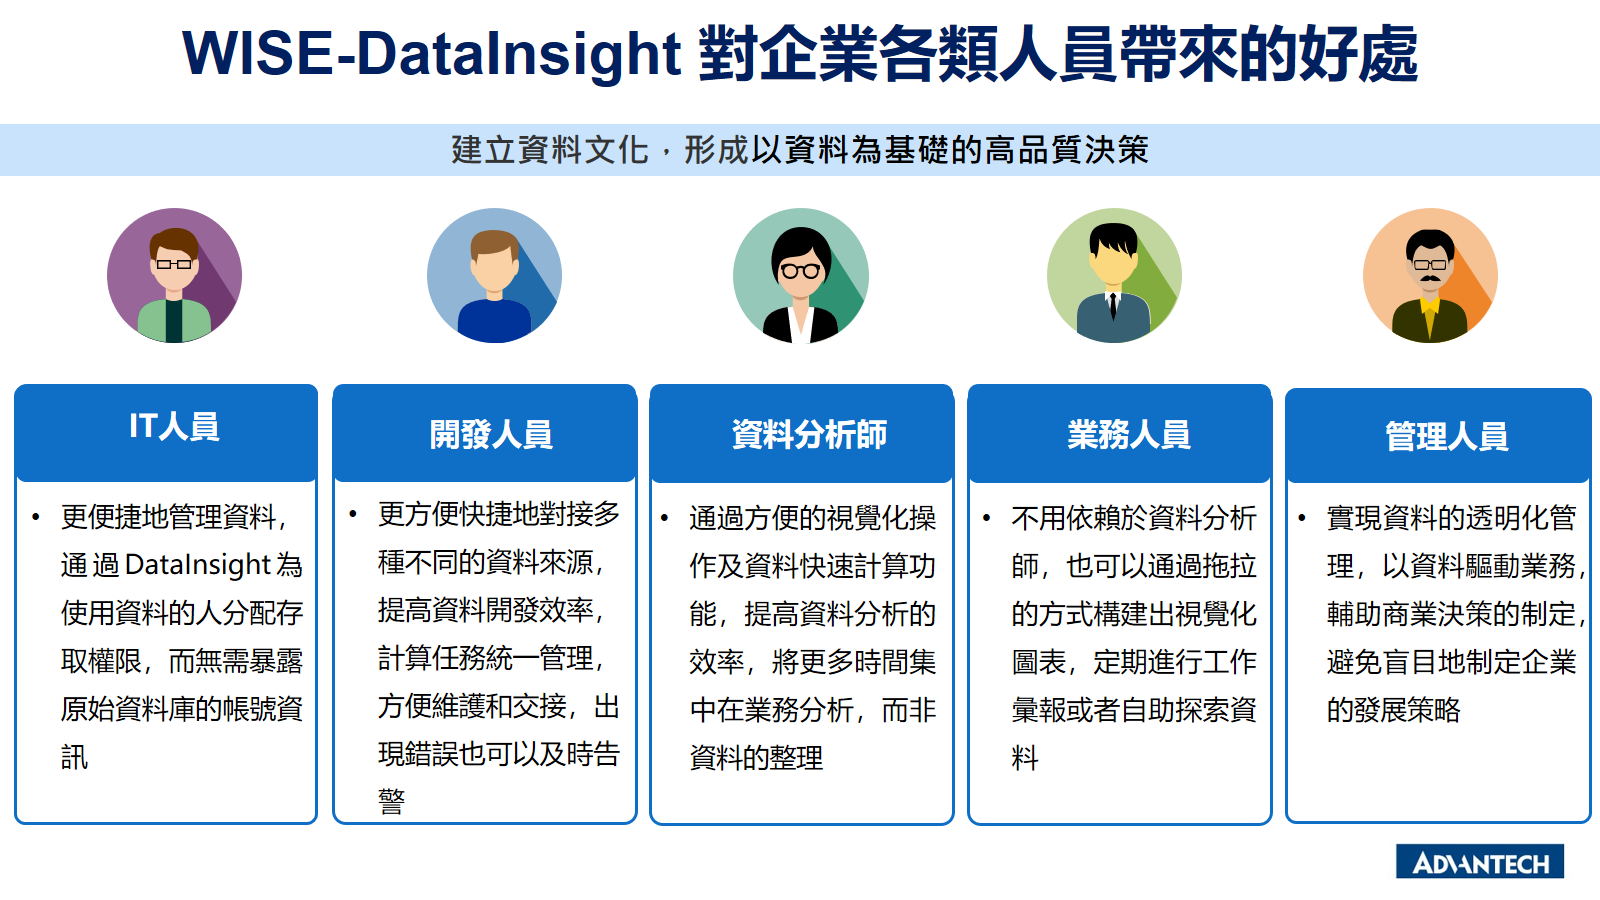 DataInsight為企業各類人員帶來的好處